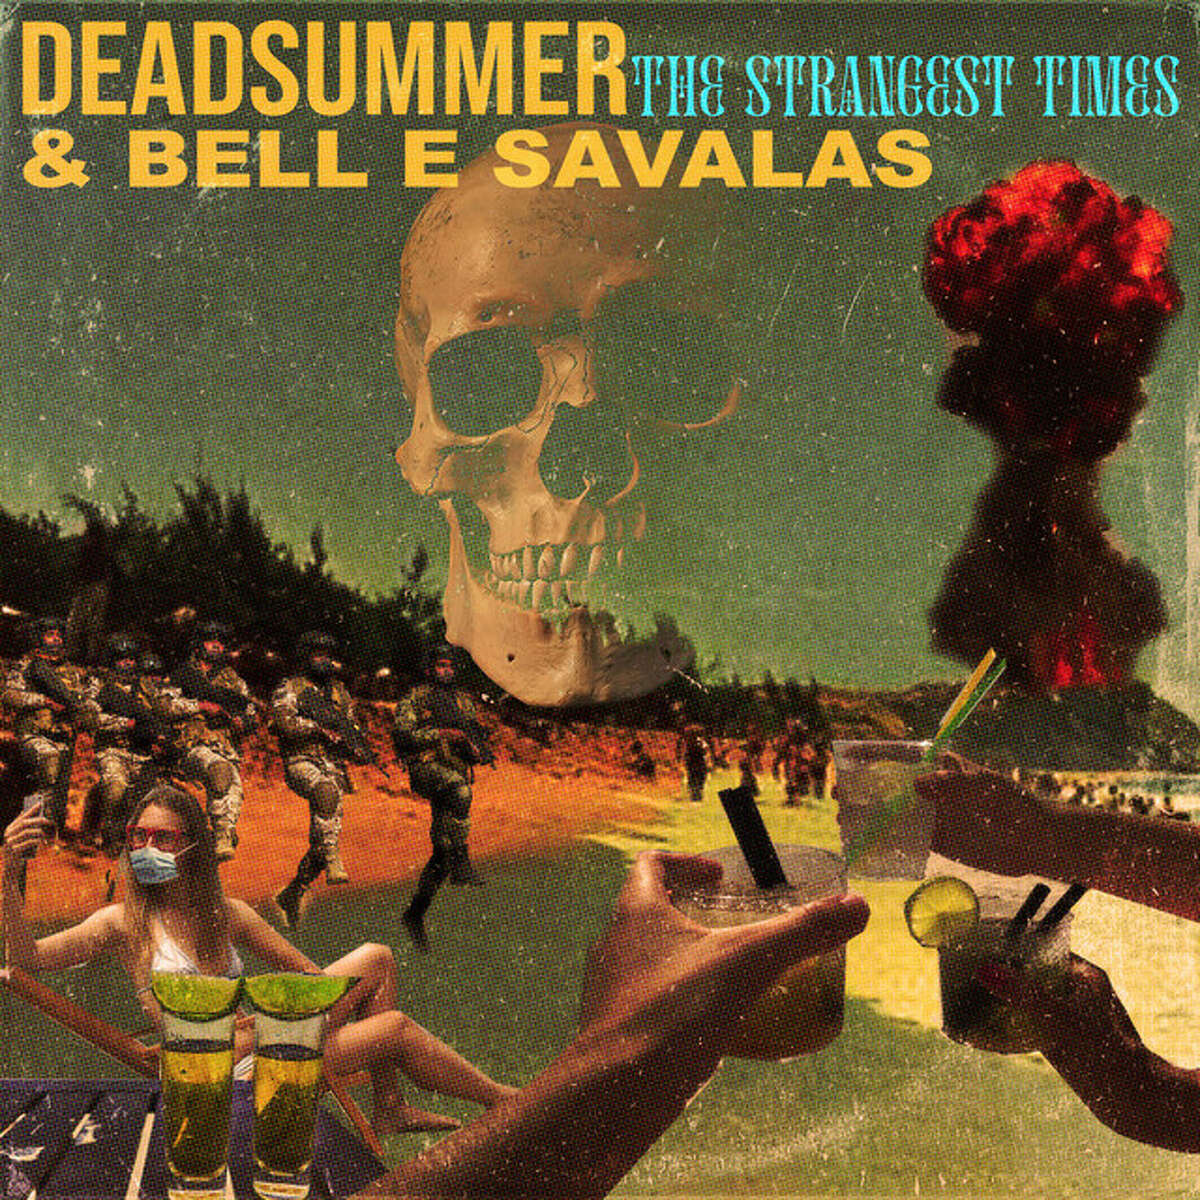 Dead Summer’s “The Strangest Times”